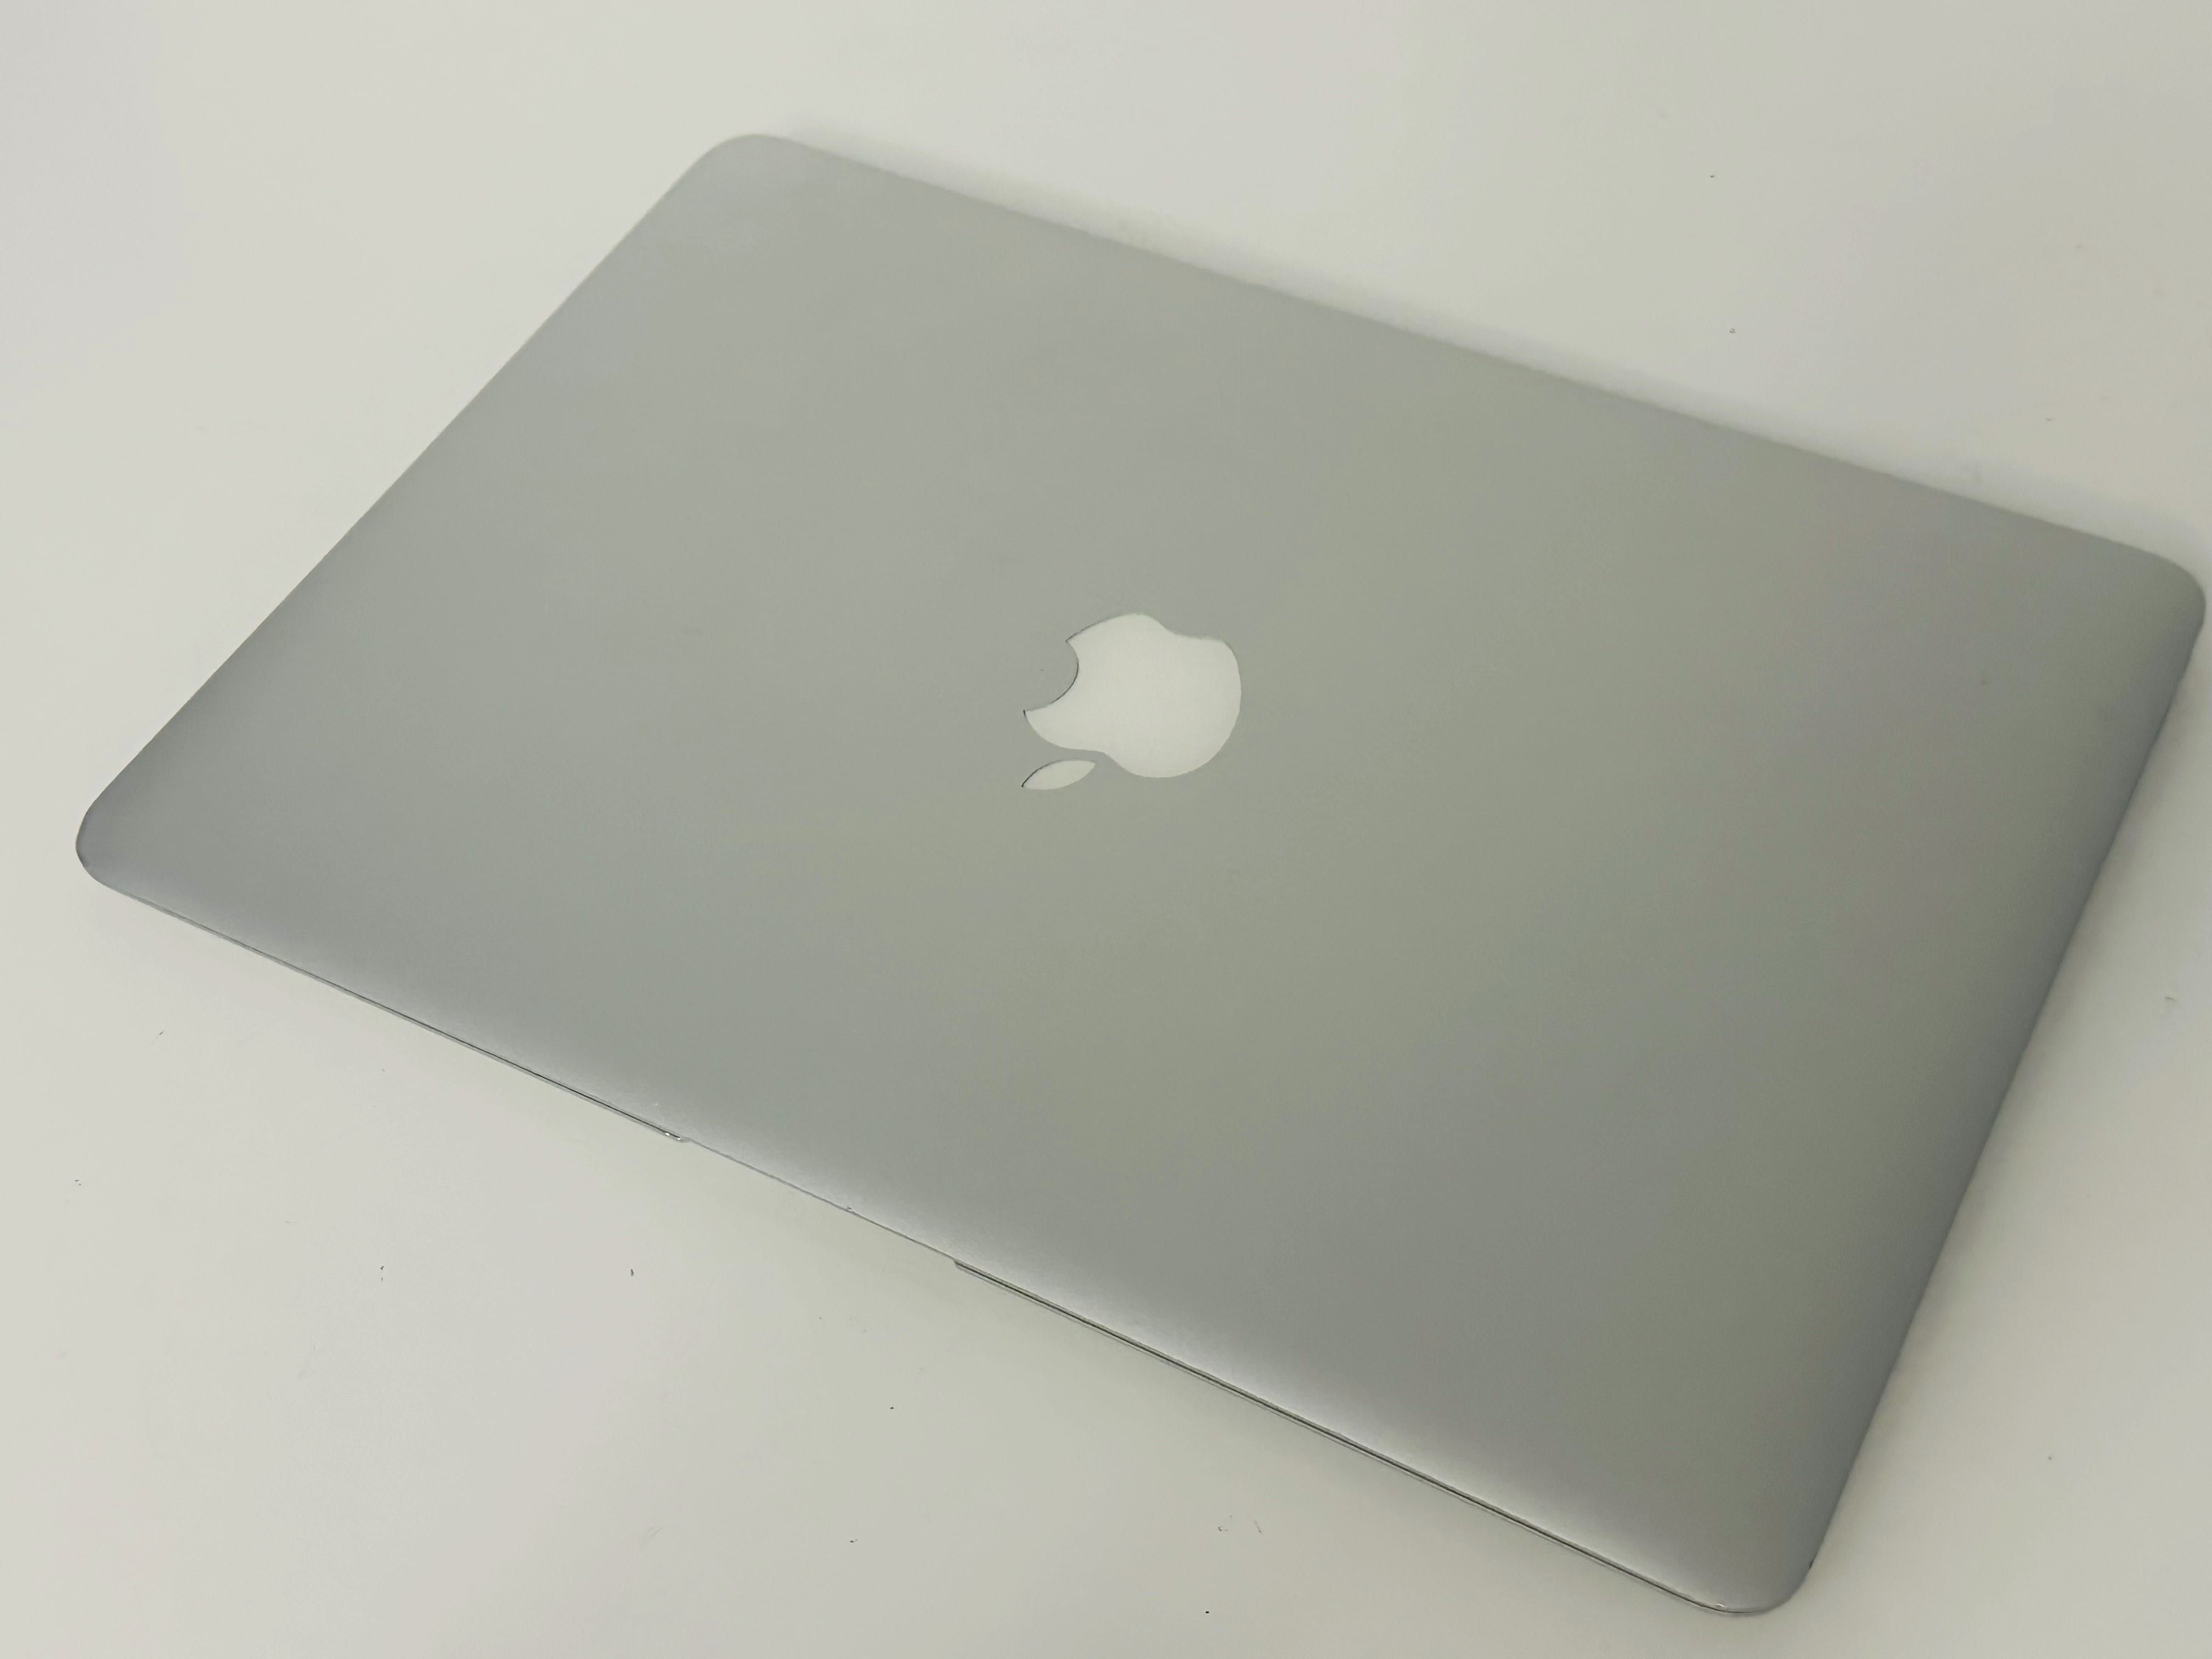 Apple MacBook Air 13 2015 i5 4GB RAM 128GB SSD Silver